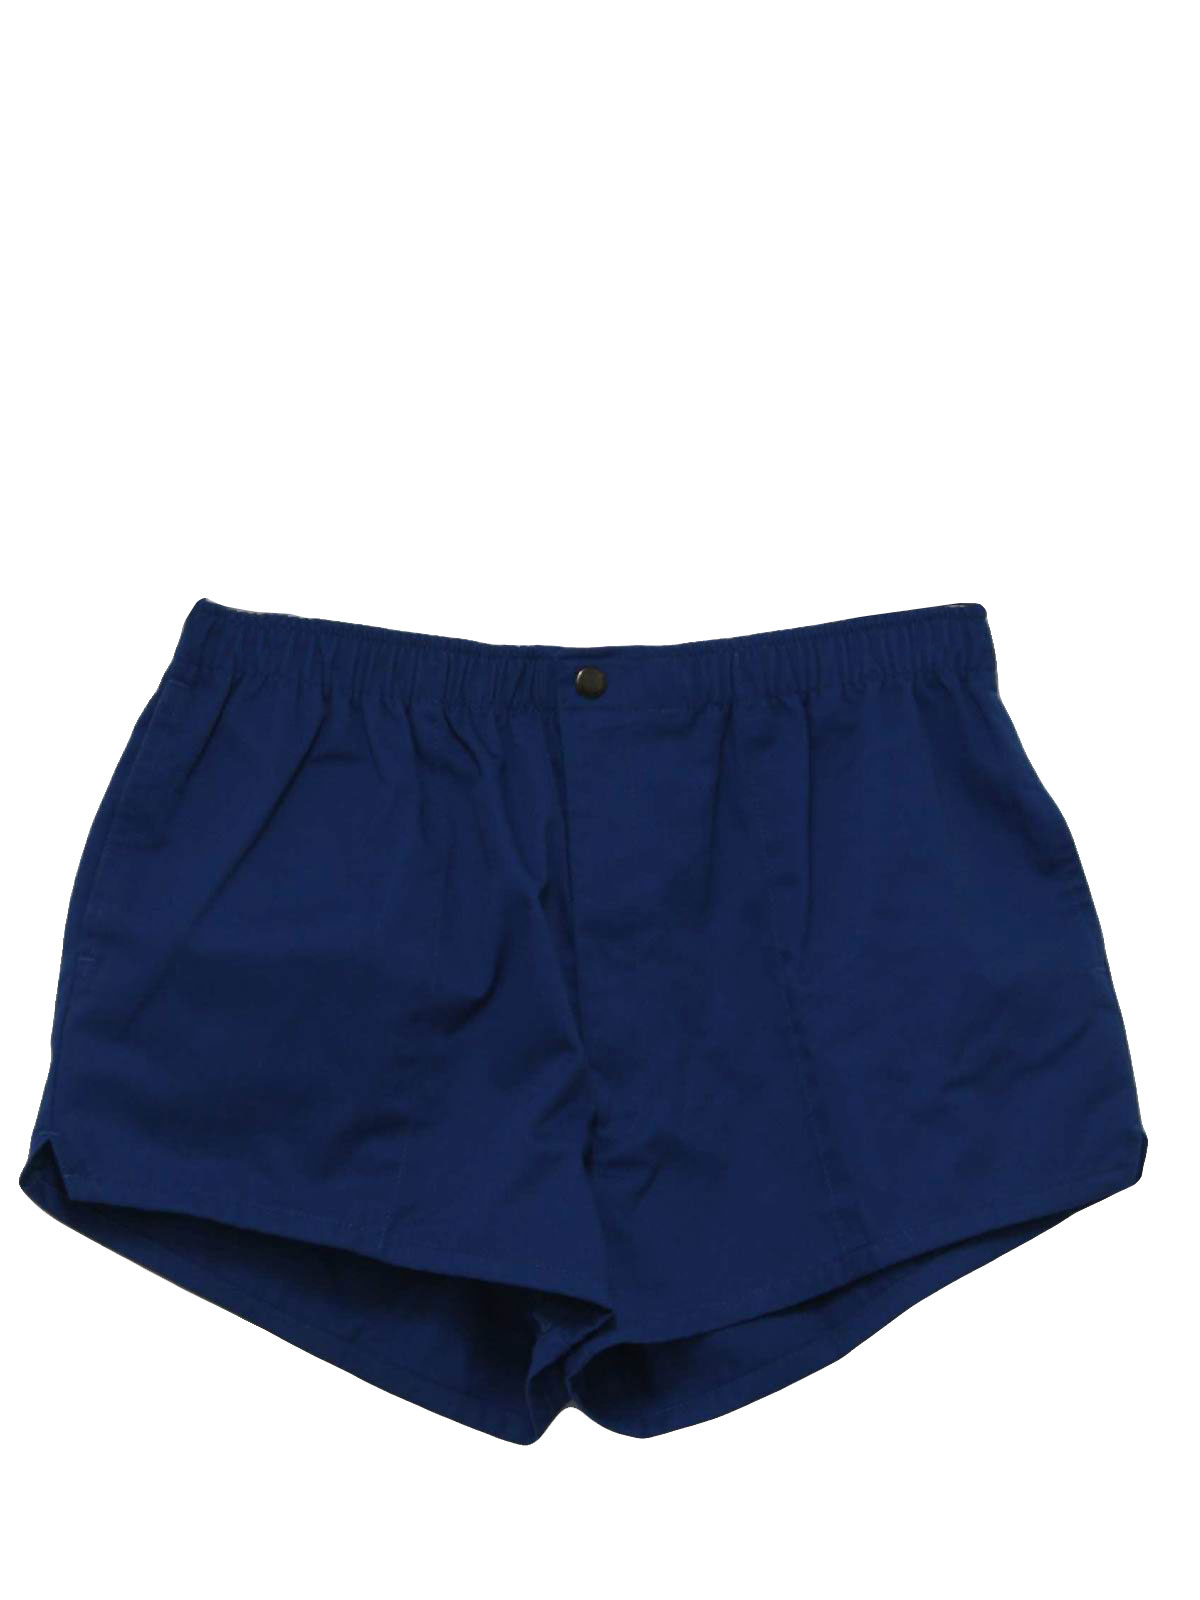 Retro 1980's Shorts (Jockey) : 80s -Jockey- Mens dark blue background ...